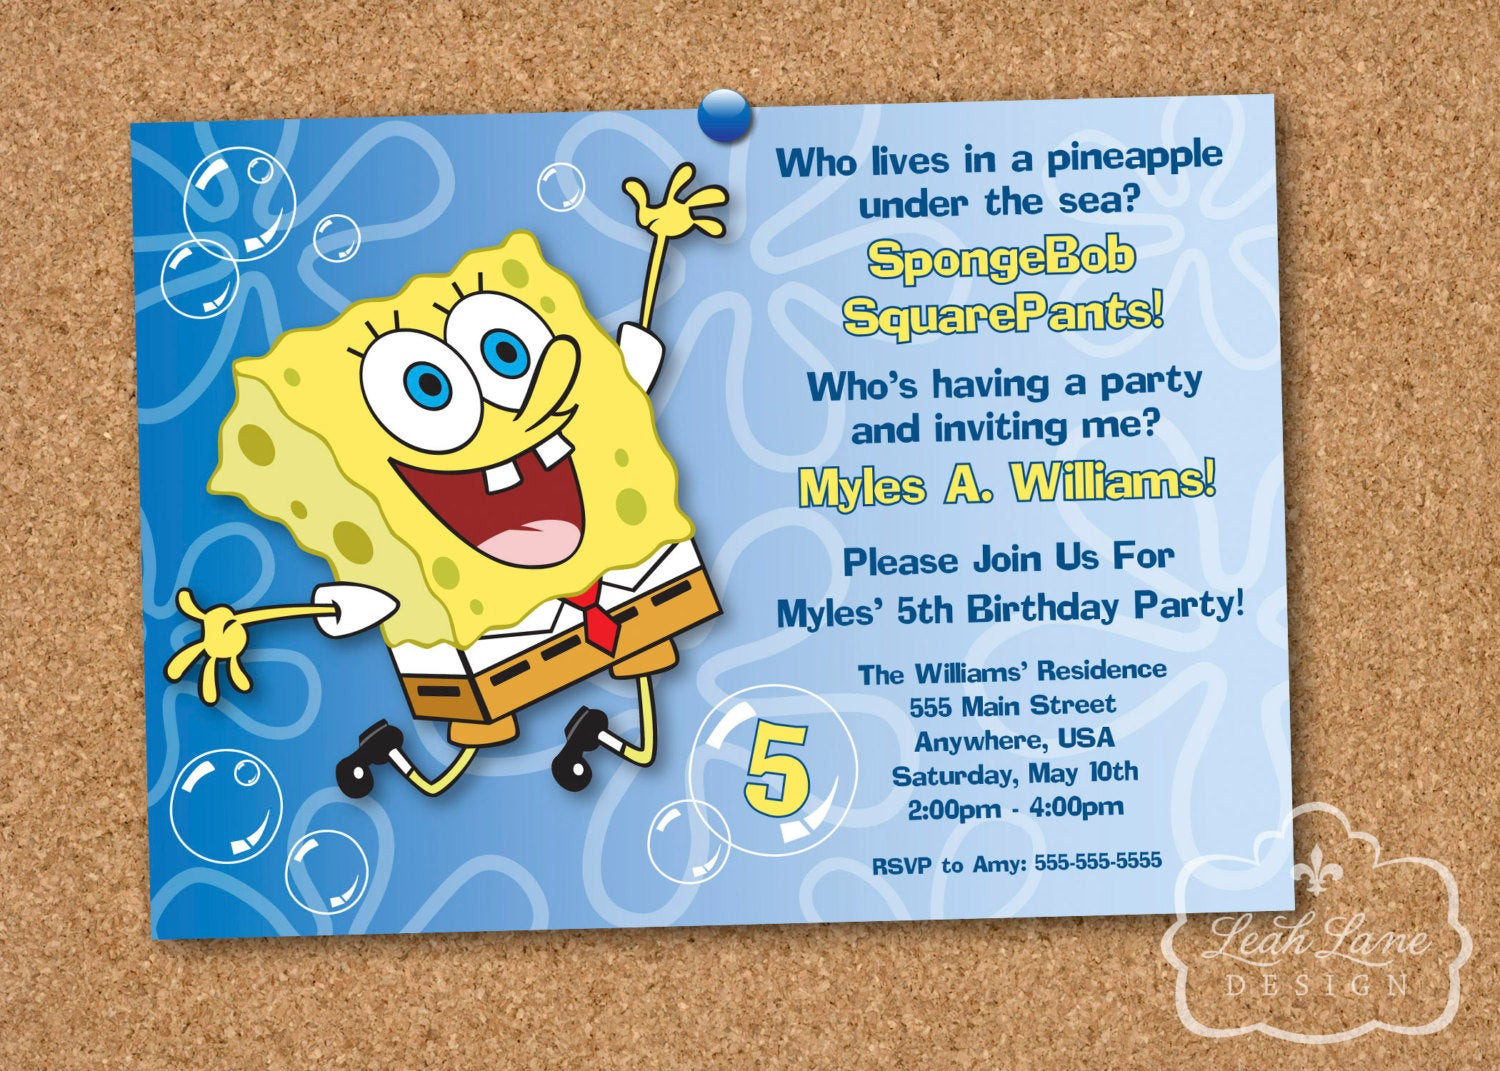 Best ideas about Spongebob Birthday Invitations
. Save or Pin SpongeBob SquarePants Birthday Party Printable Invitation Now.